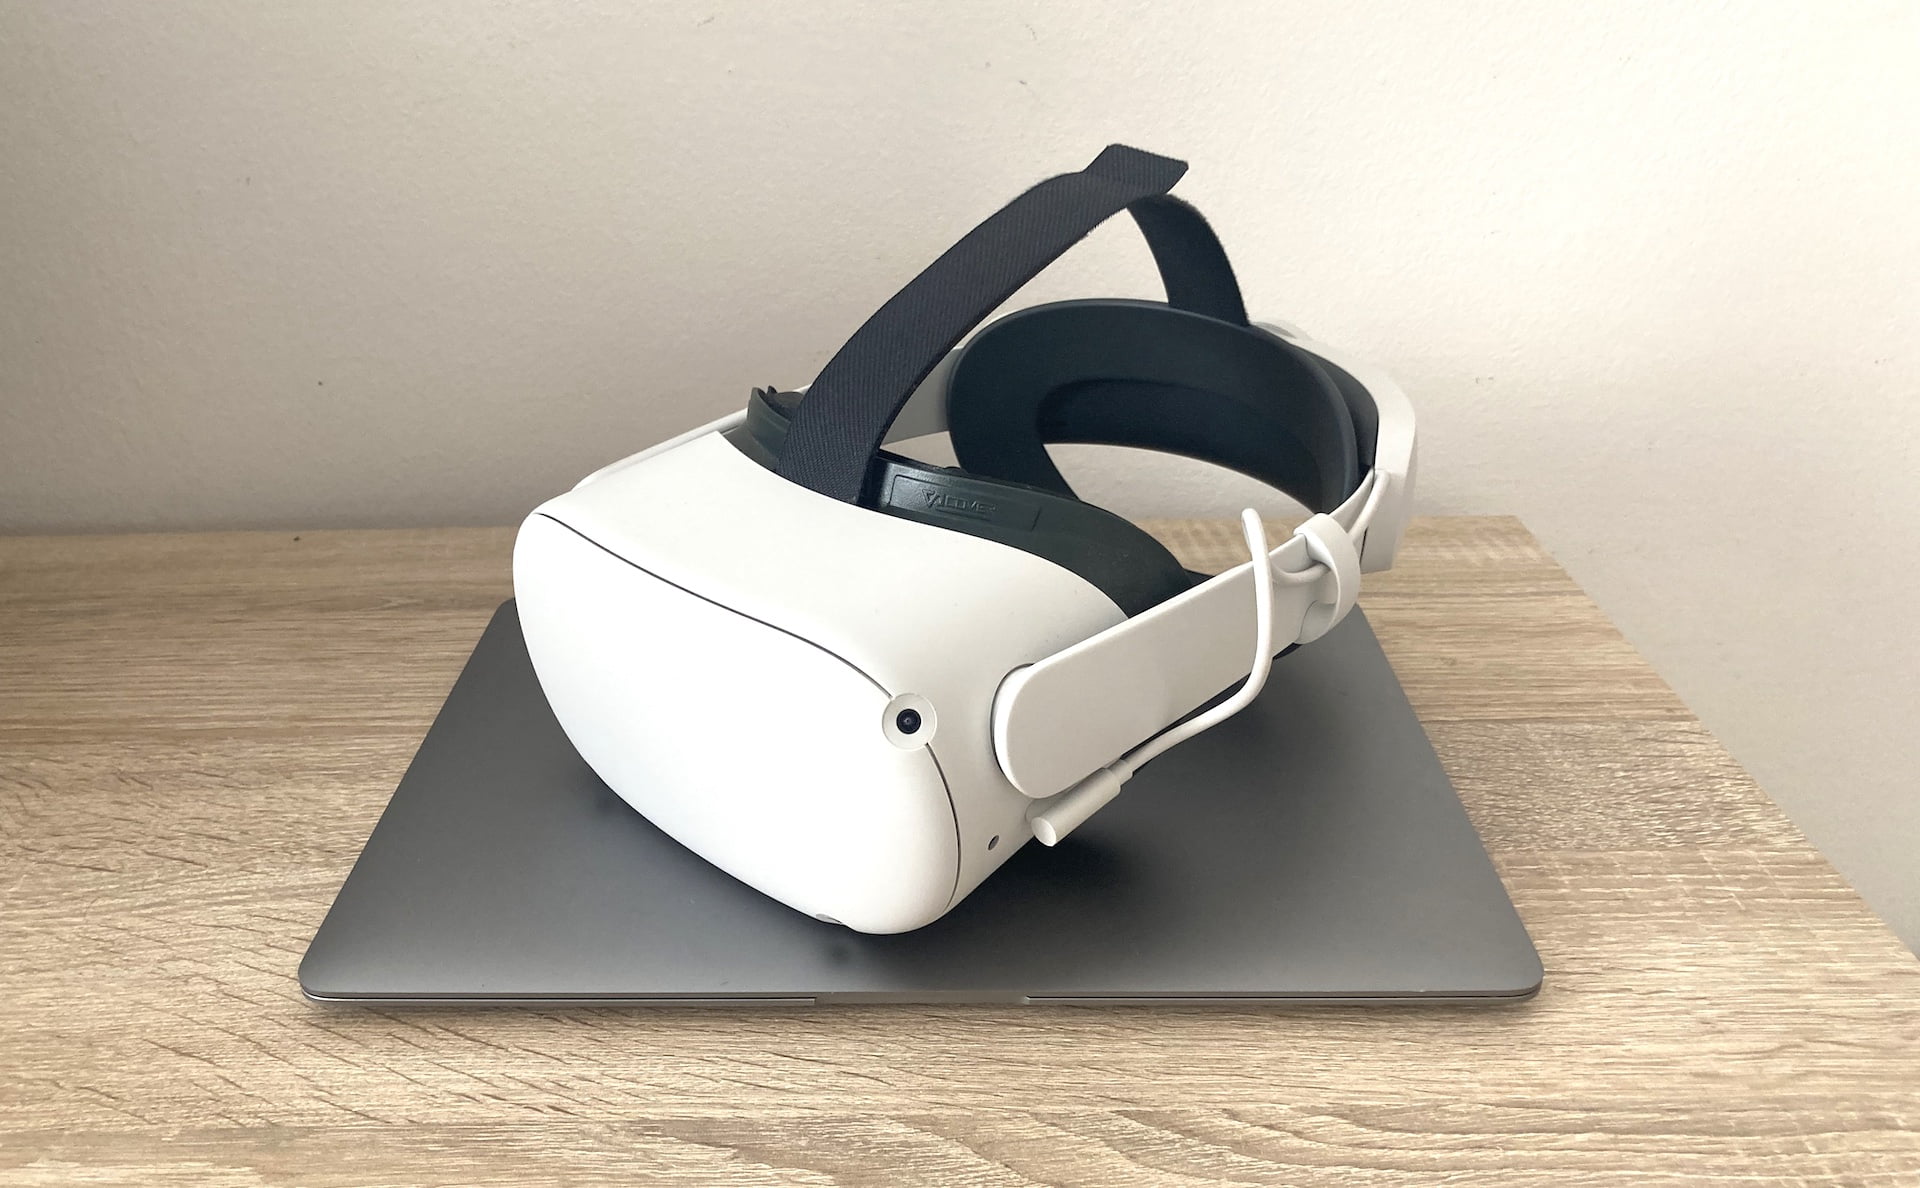 VR is in search of its raison d’être